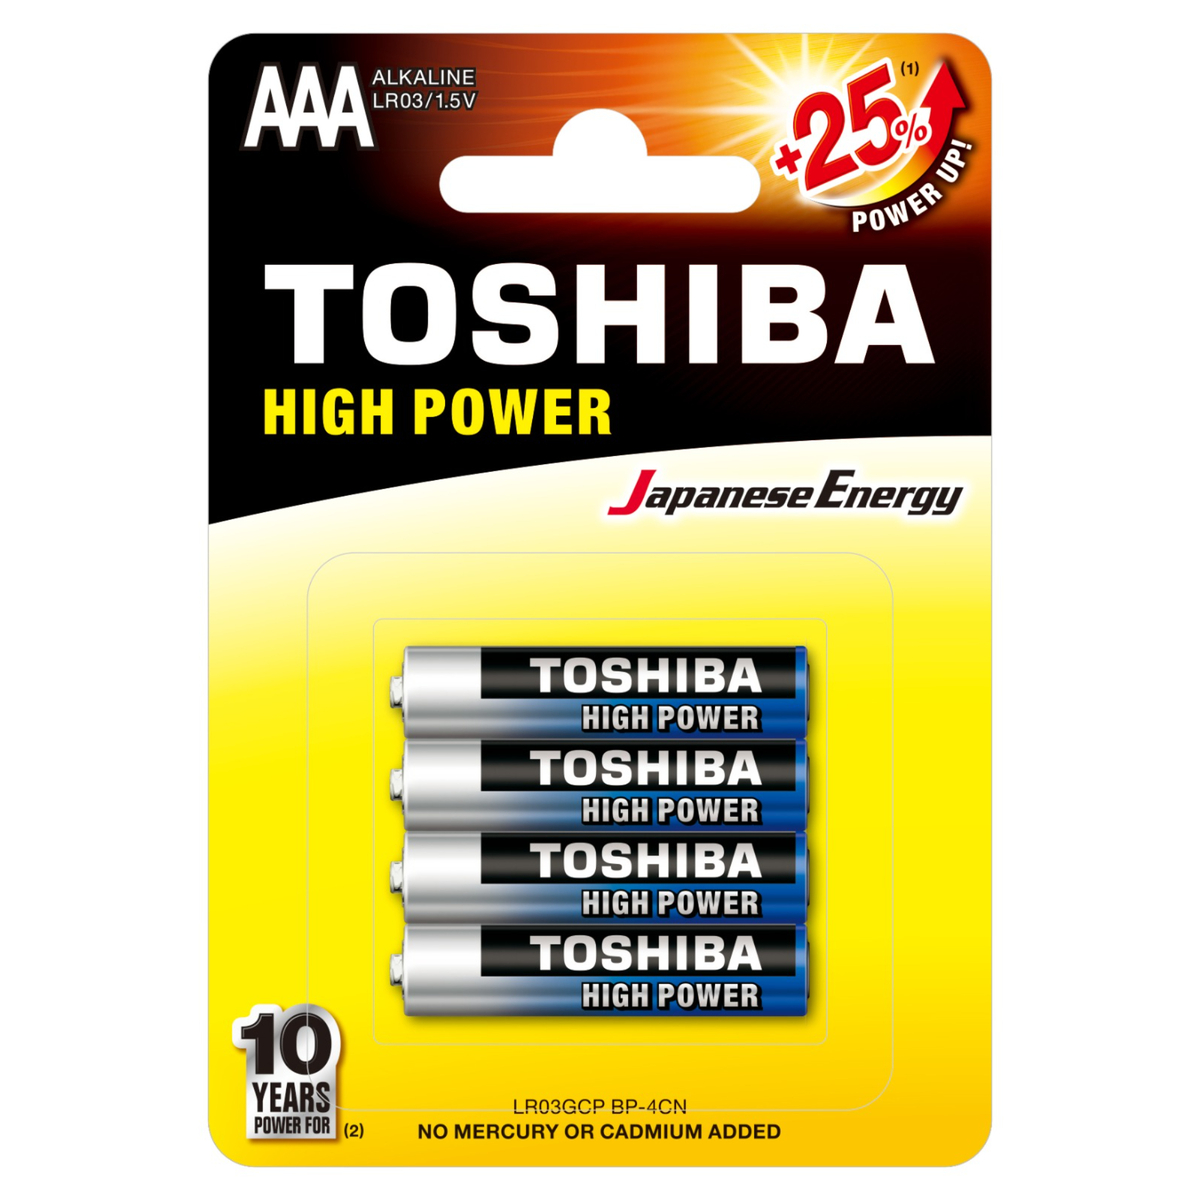 Toshiba High Power Alkaline AAA Battery, 1.5V x 4 Pcs, LR03